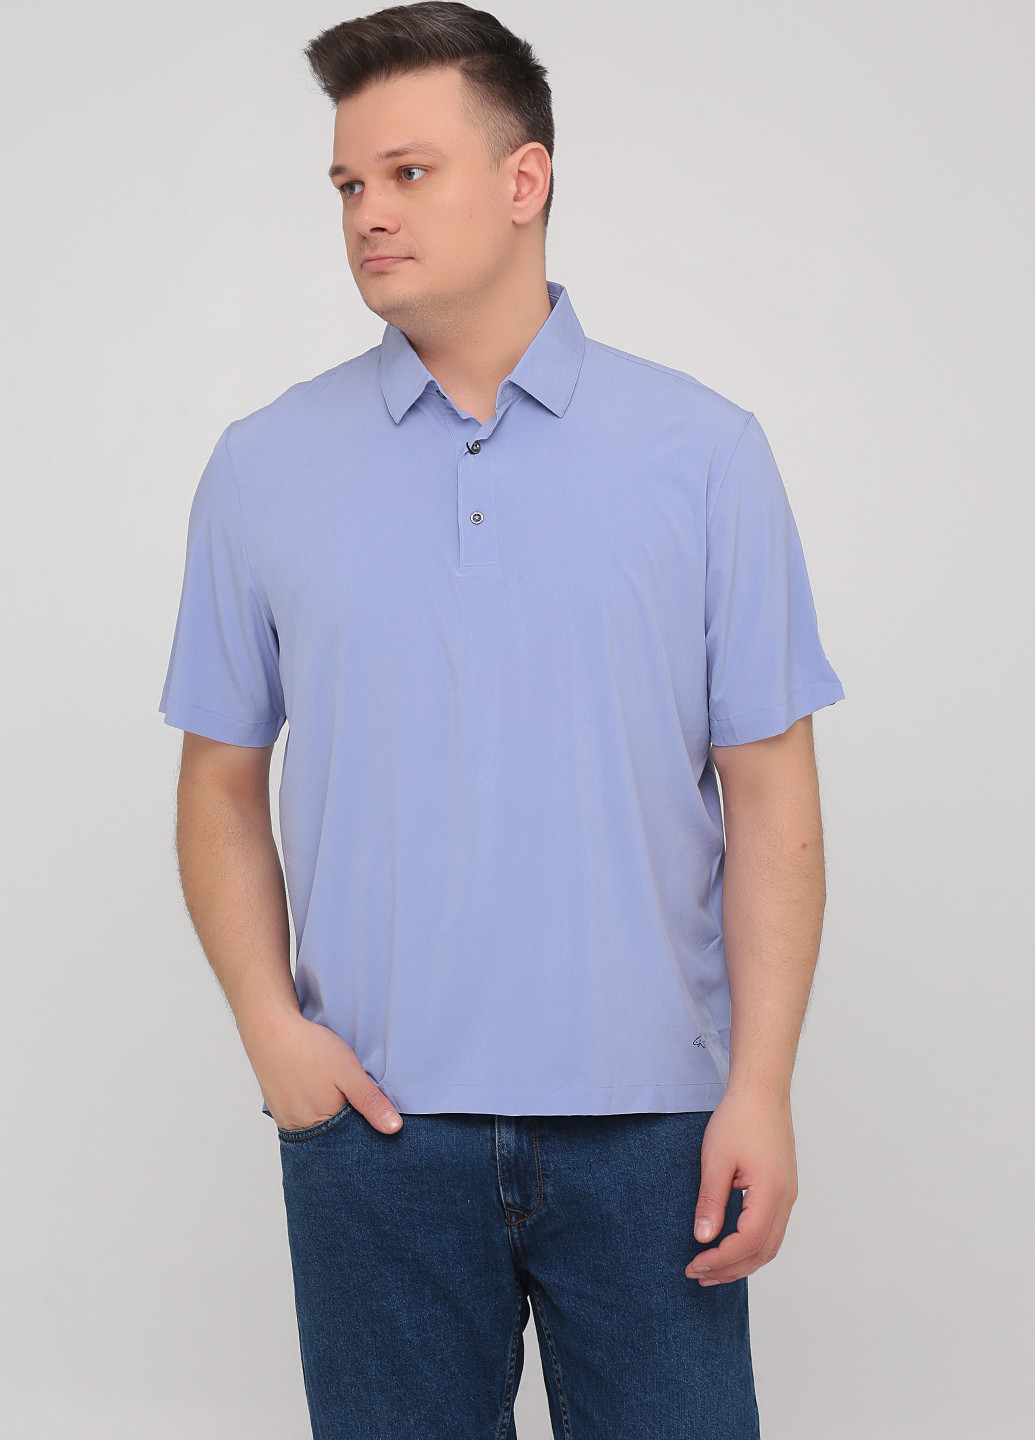 Сиреневая футболка-поло для мужчин Greg Norman